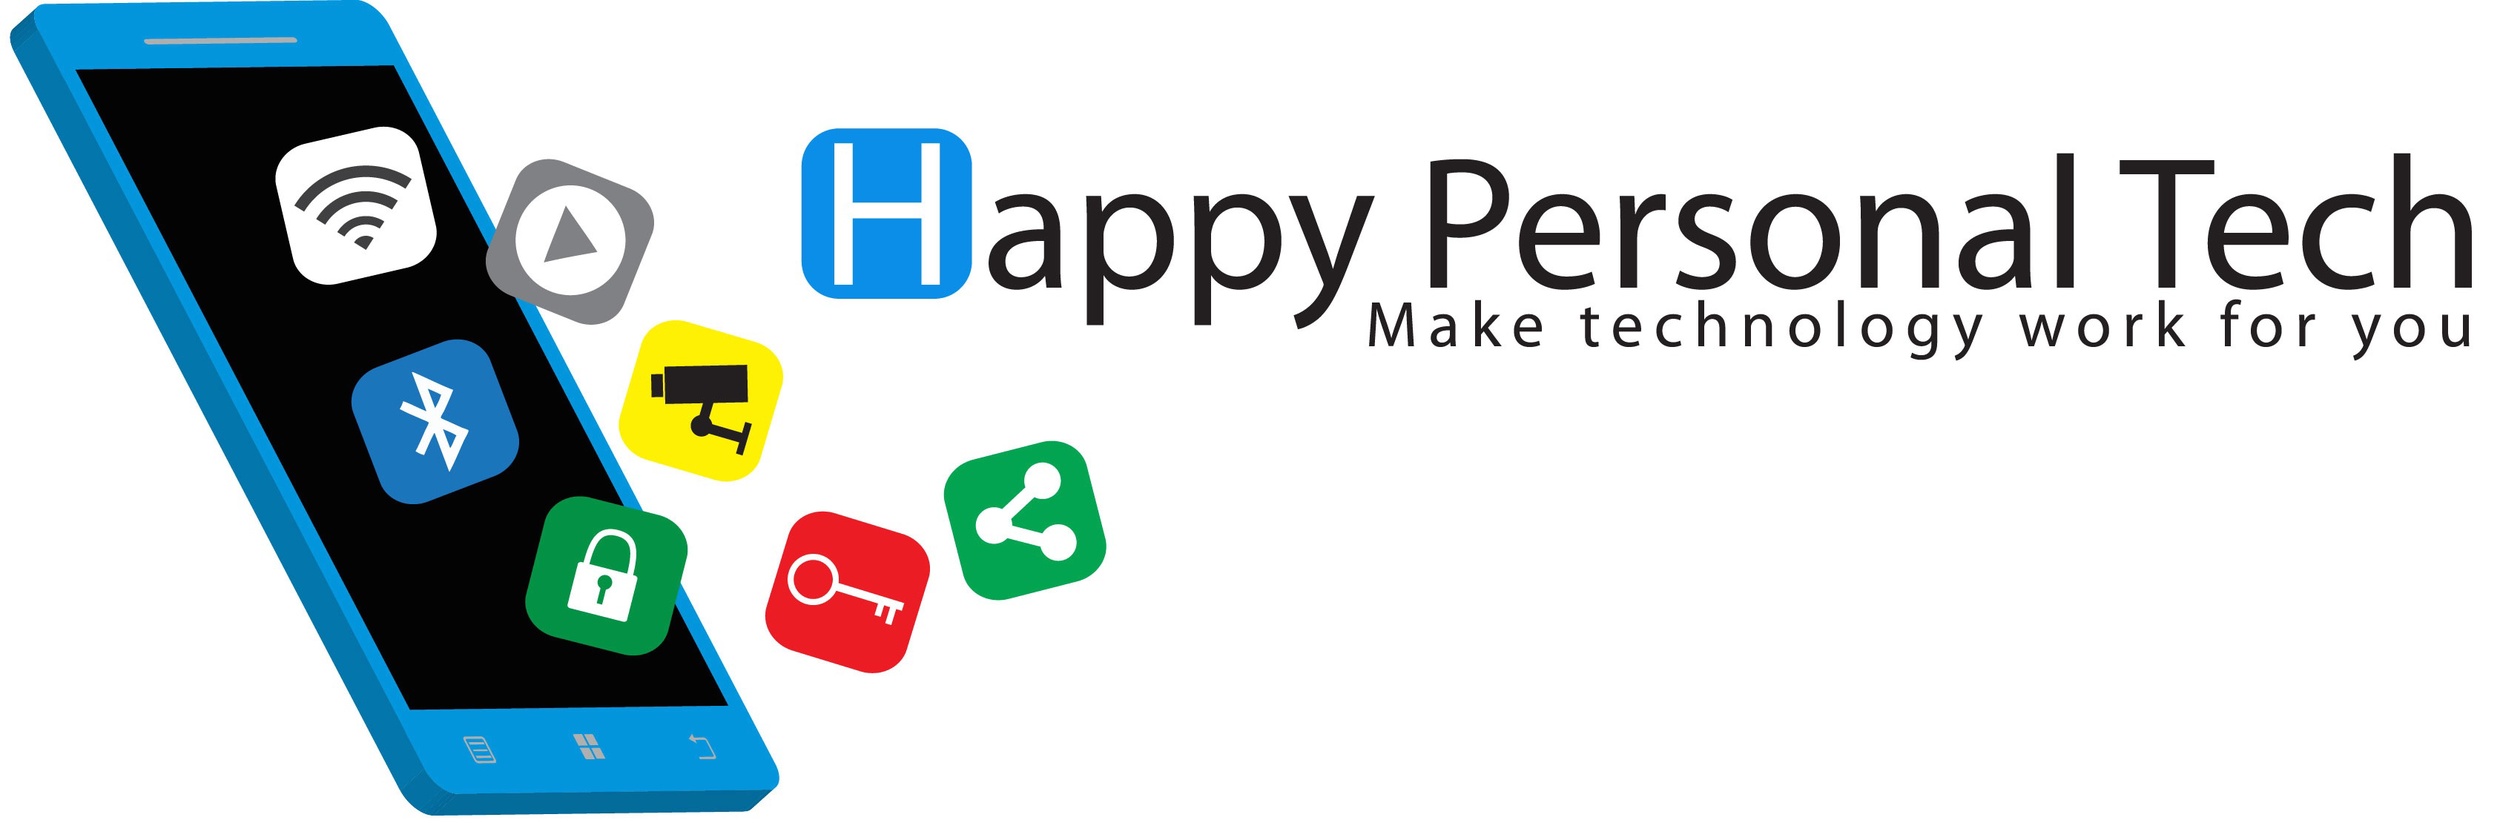 Happy Personal Tech